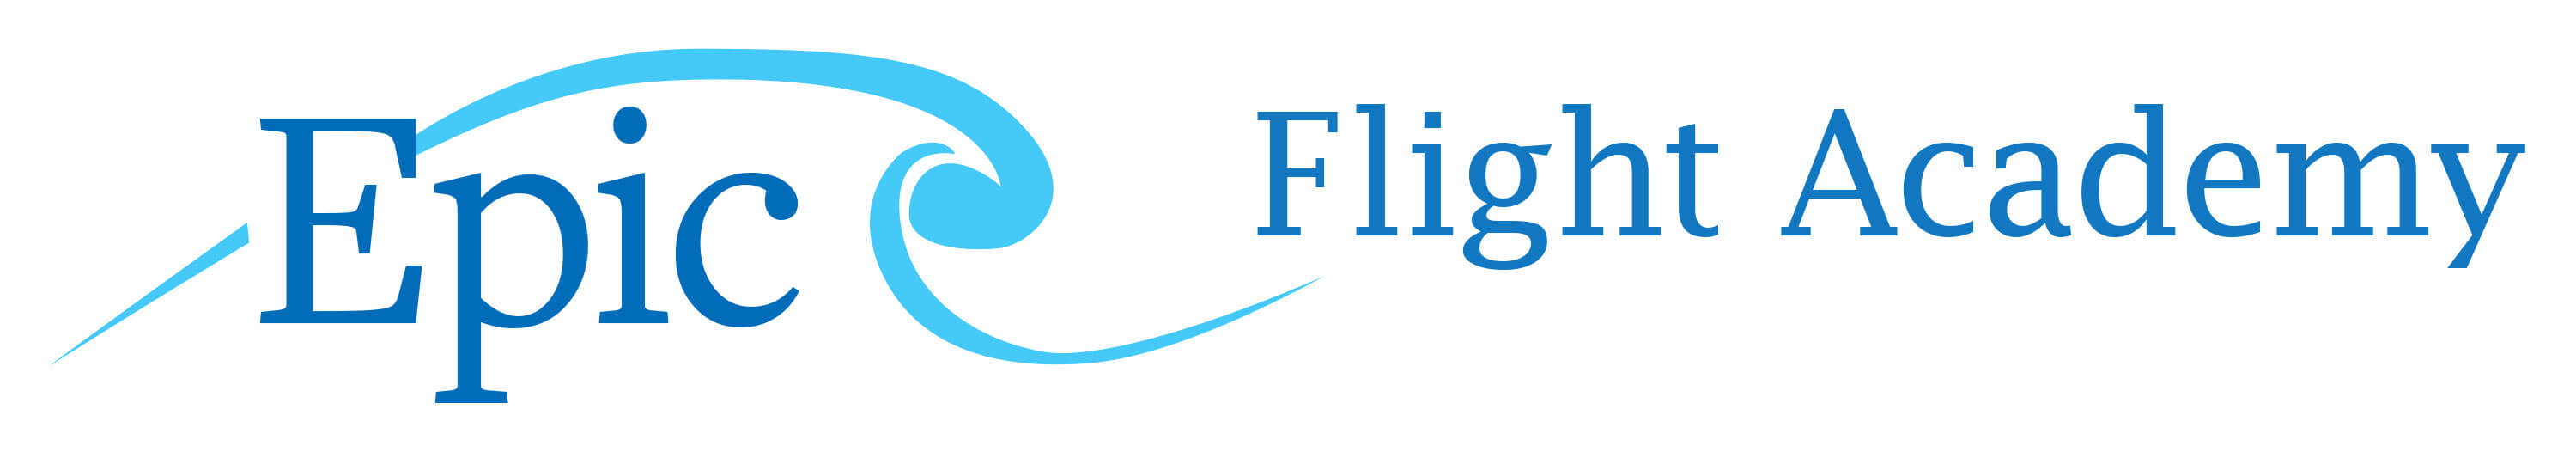 Epic Flight Academy Color Logo High Res